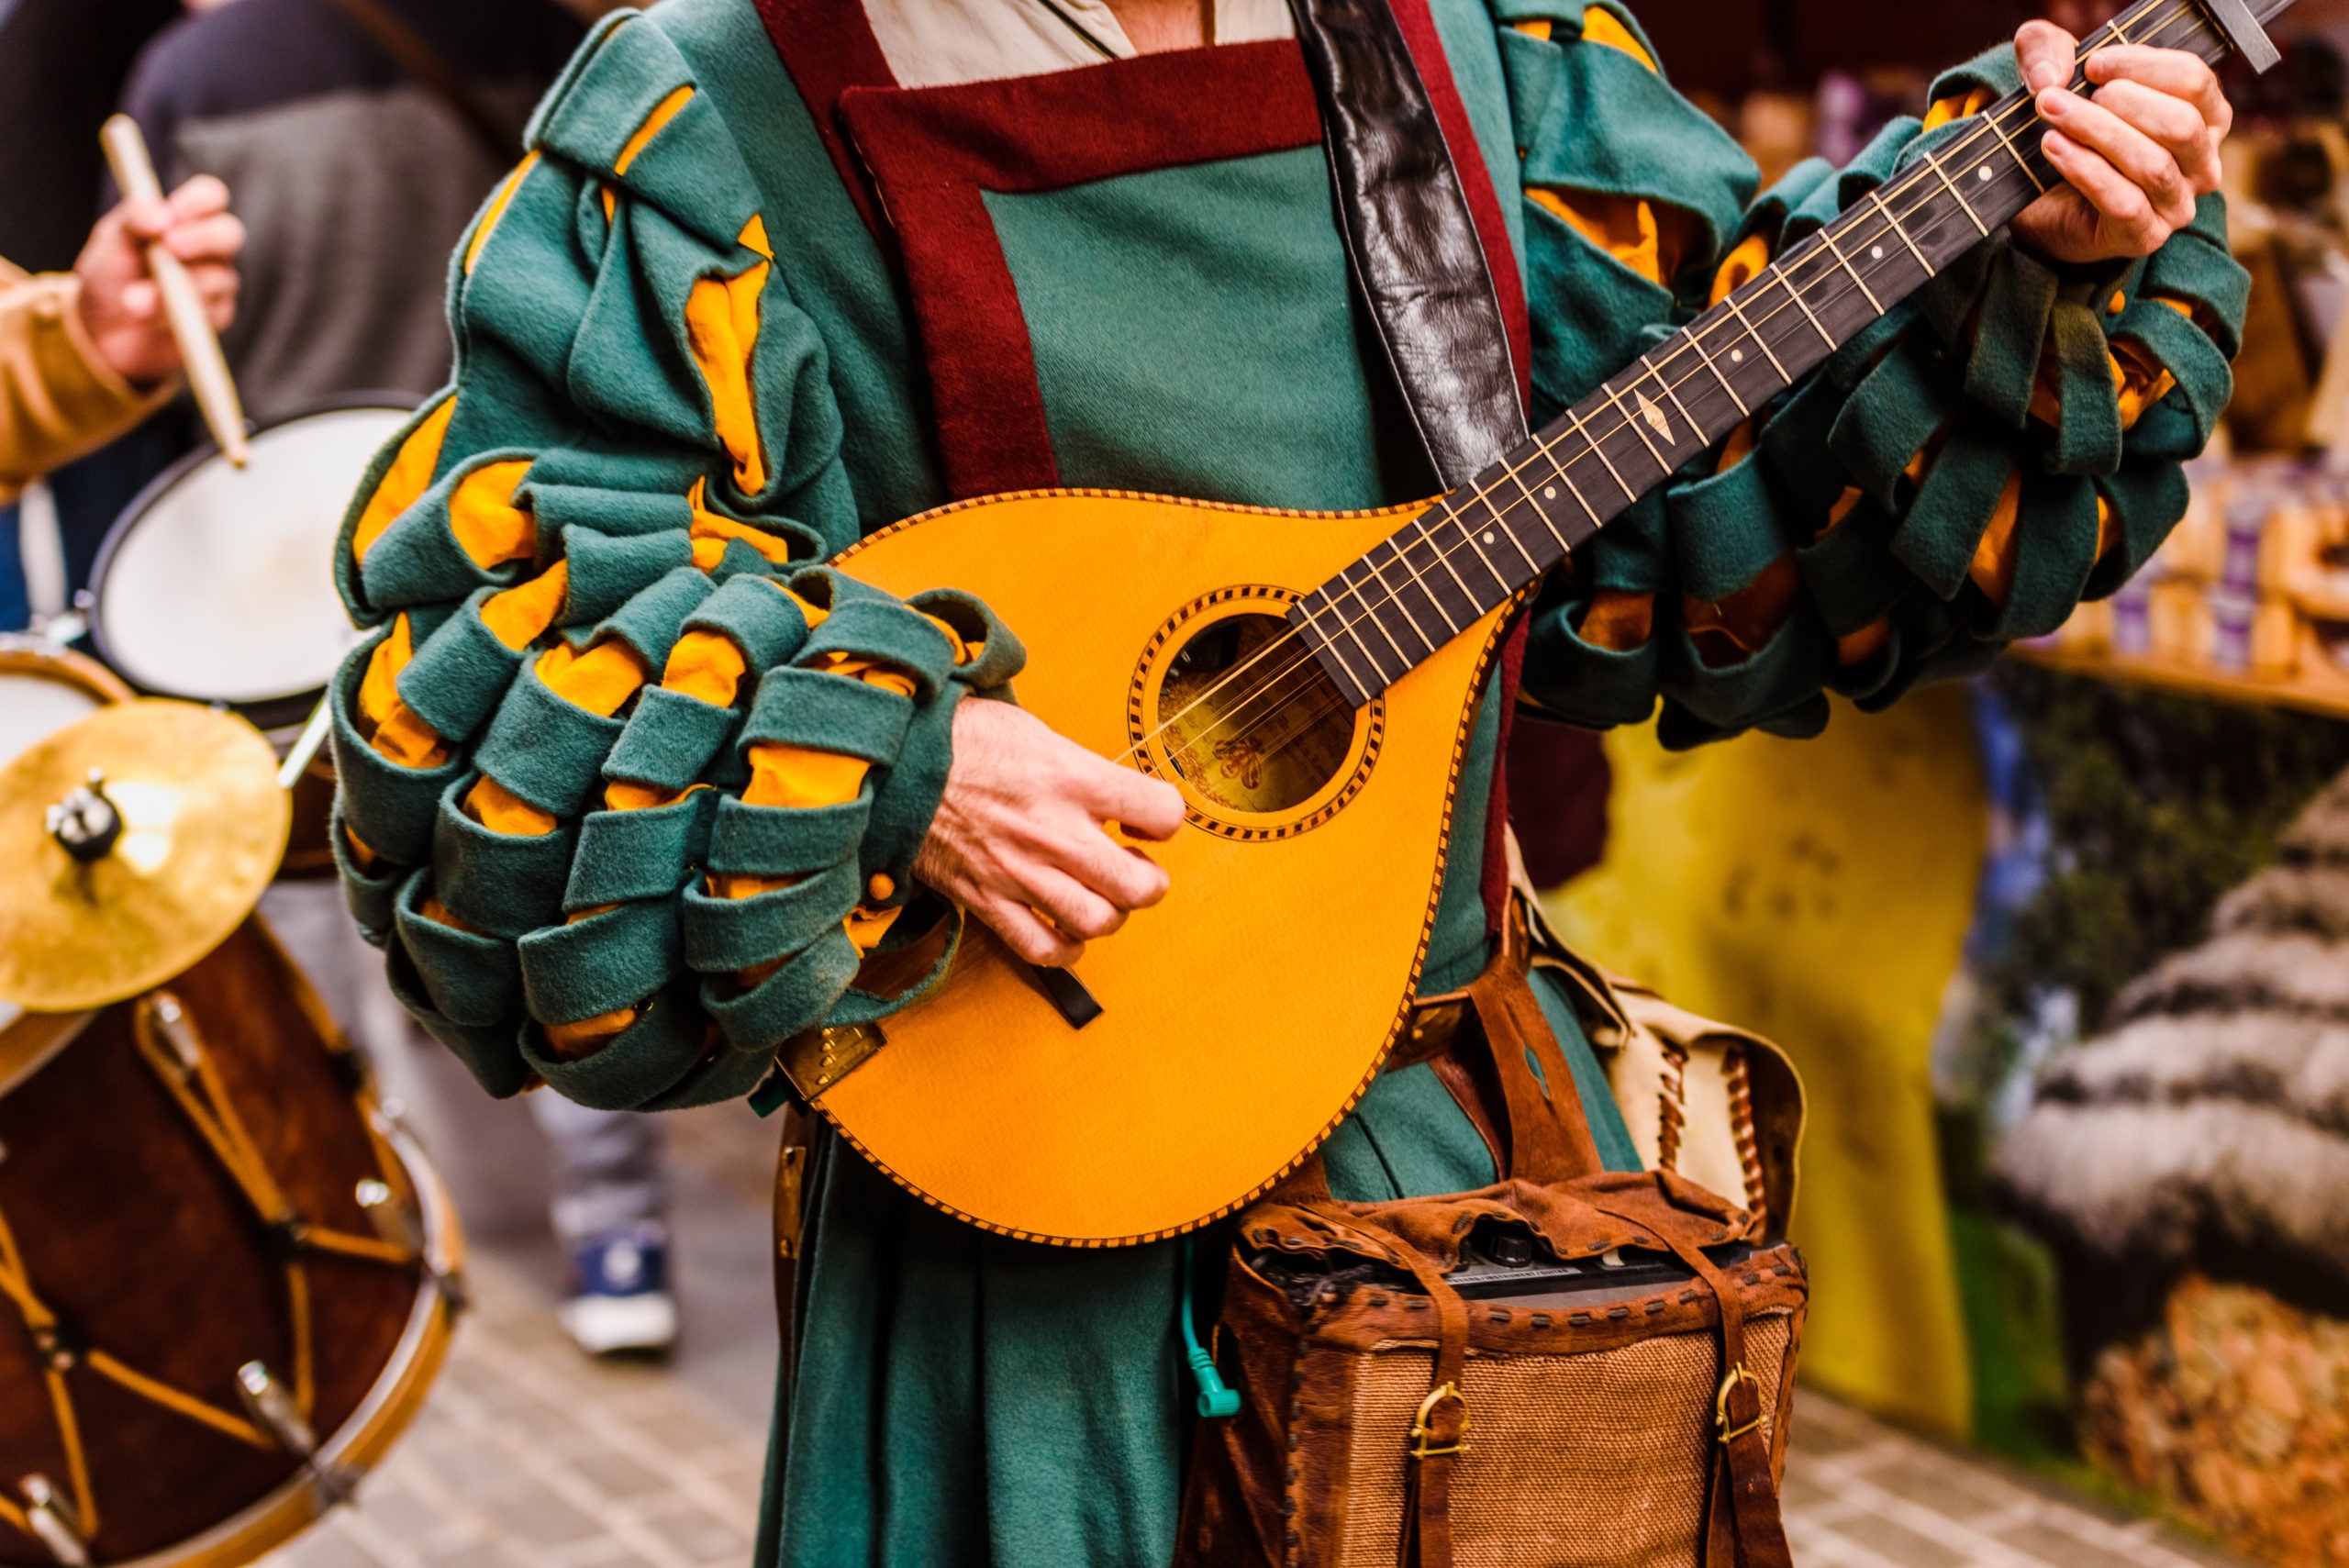 Medieval troubadour playing an antique guitar.